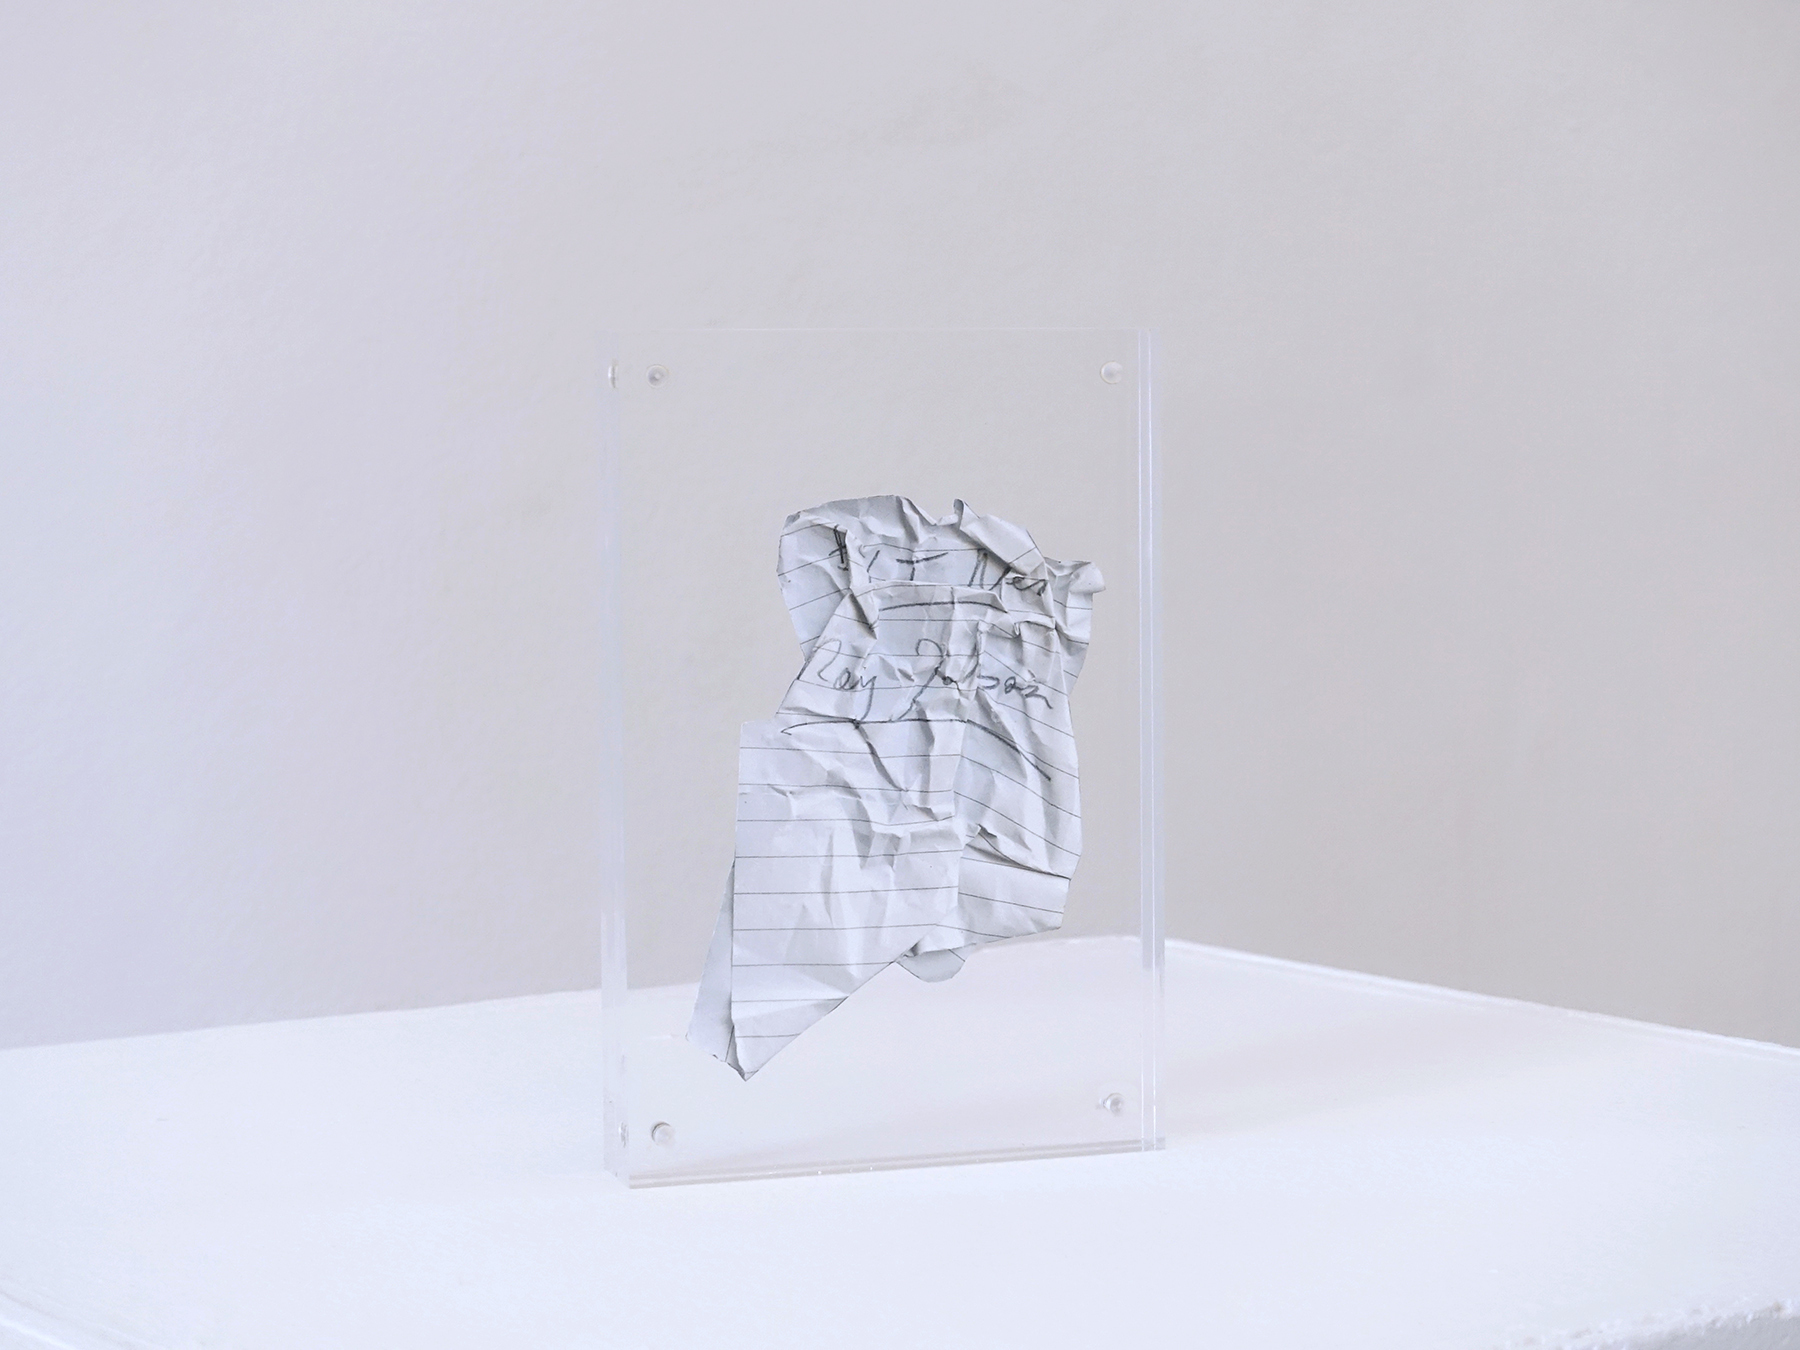 Marta Galmozzi, Untitled (2018), photograph, plexiglass frame, installation view. Courtesy of the artist and PVC